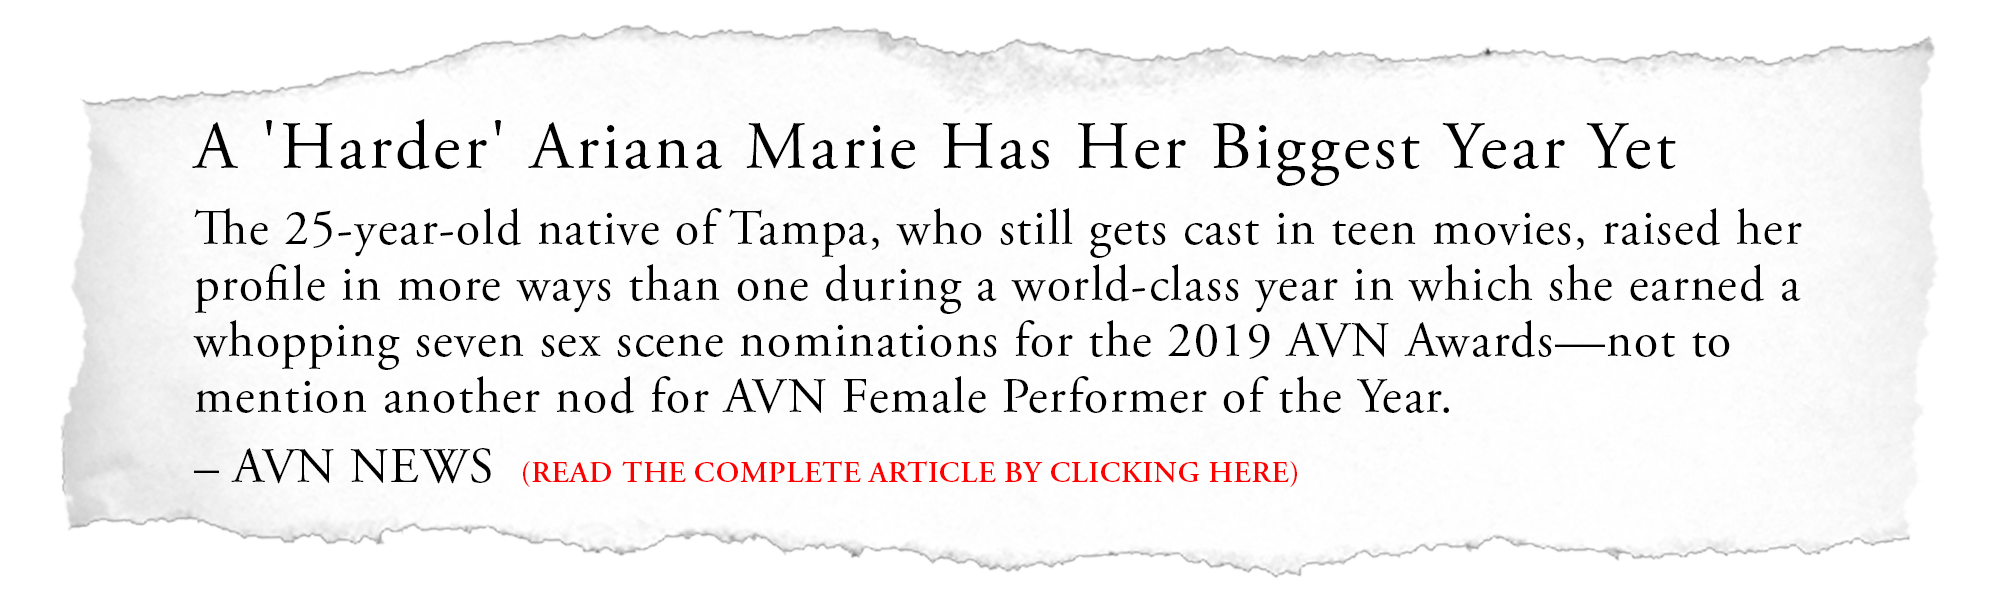 Ariana Marie AVN News Article